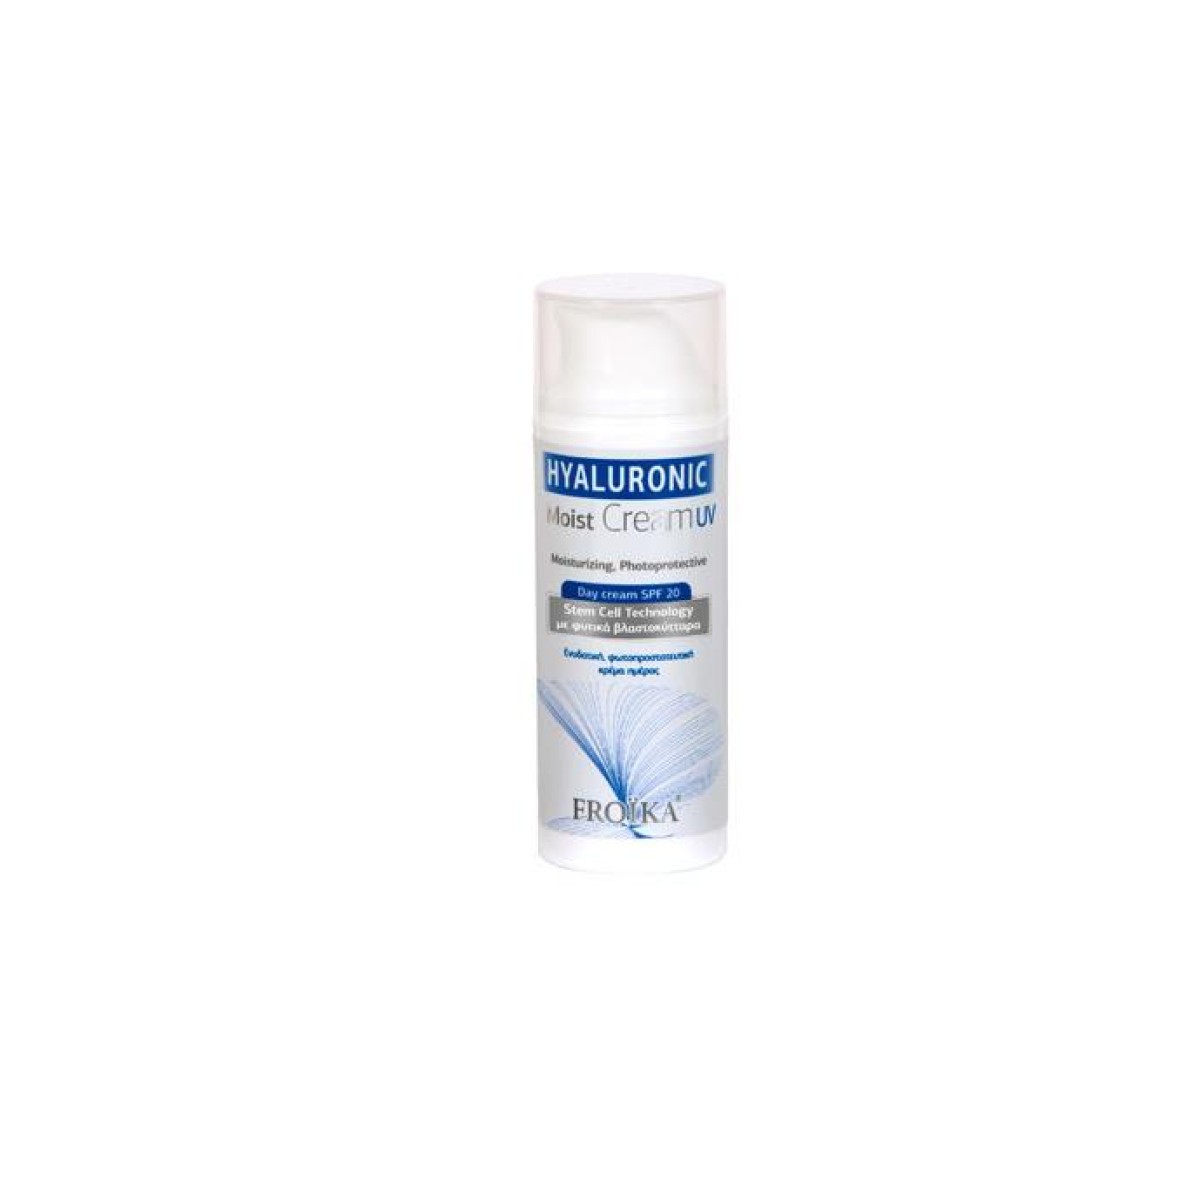 Froika | Moist Cream UV SPF 20 | Ενυδατική, Φωτοπροστατευτική Κρέμα Ημέρας SPF 20 | 50ml